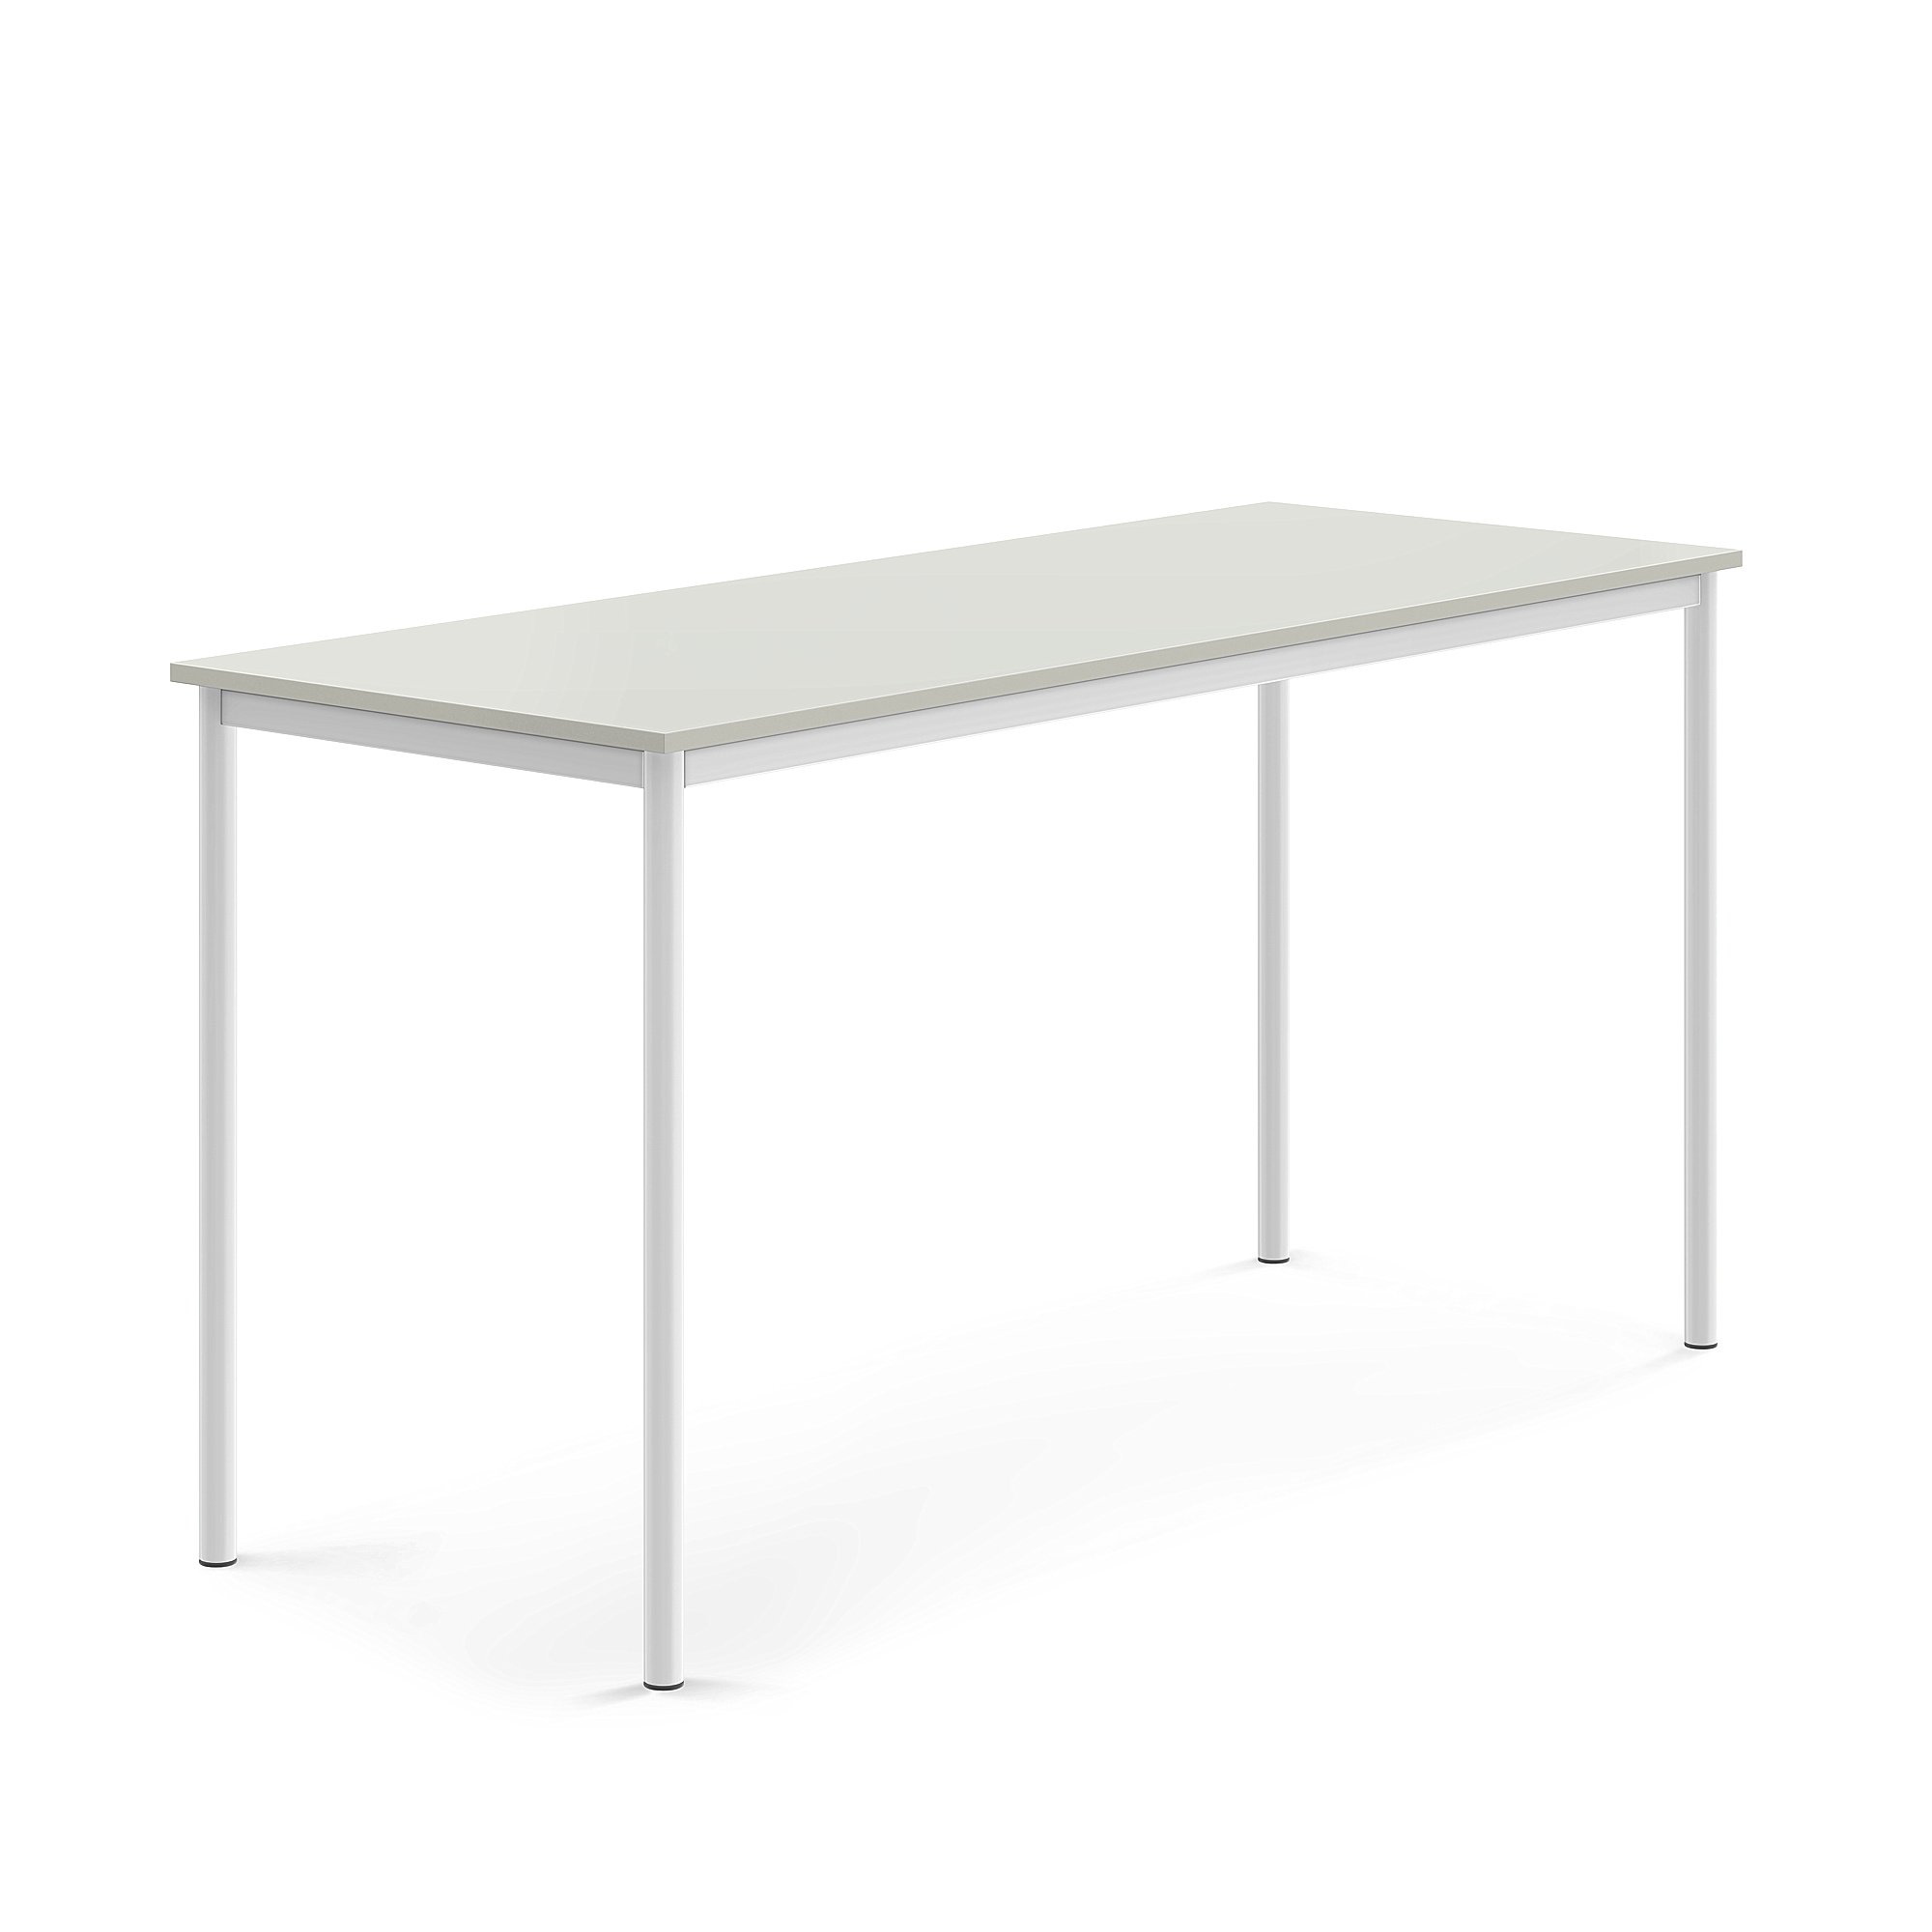 Stůl BORÅS, 1800x700x900 mm, bílé nohy, HPL deska, šedá